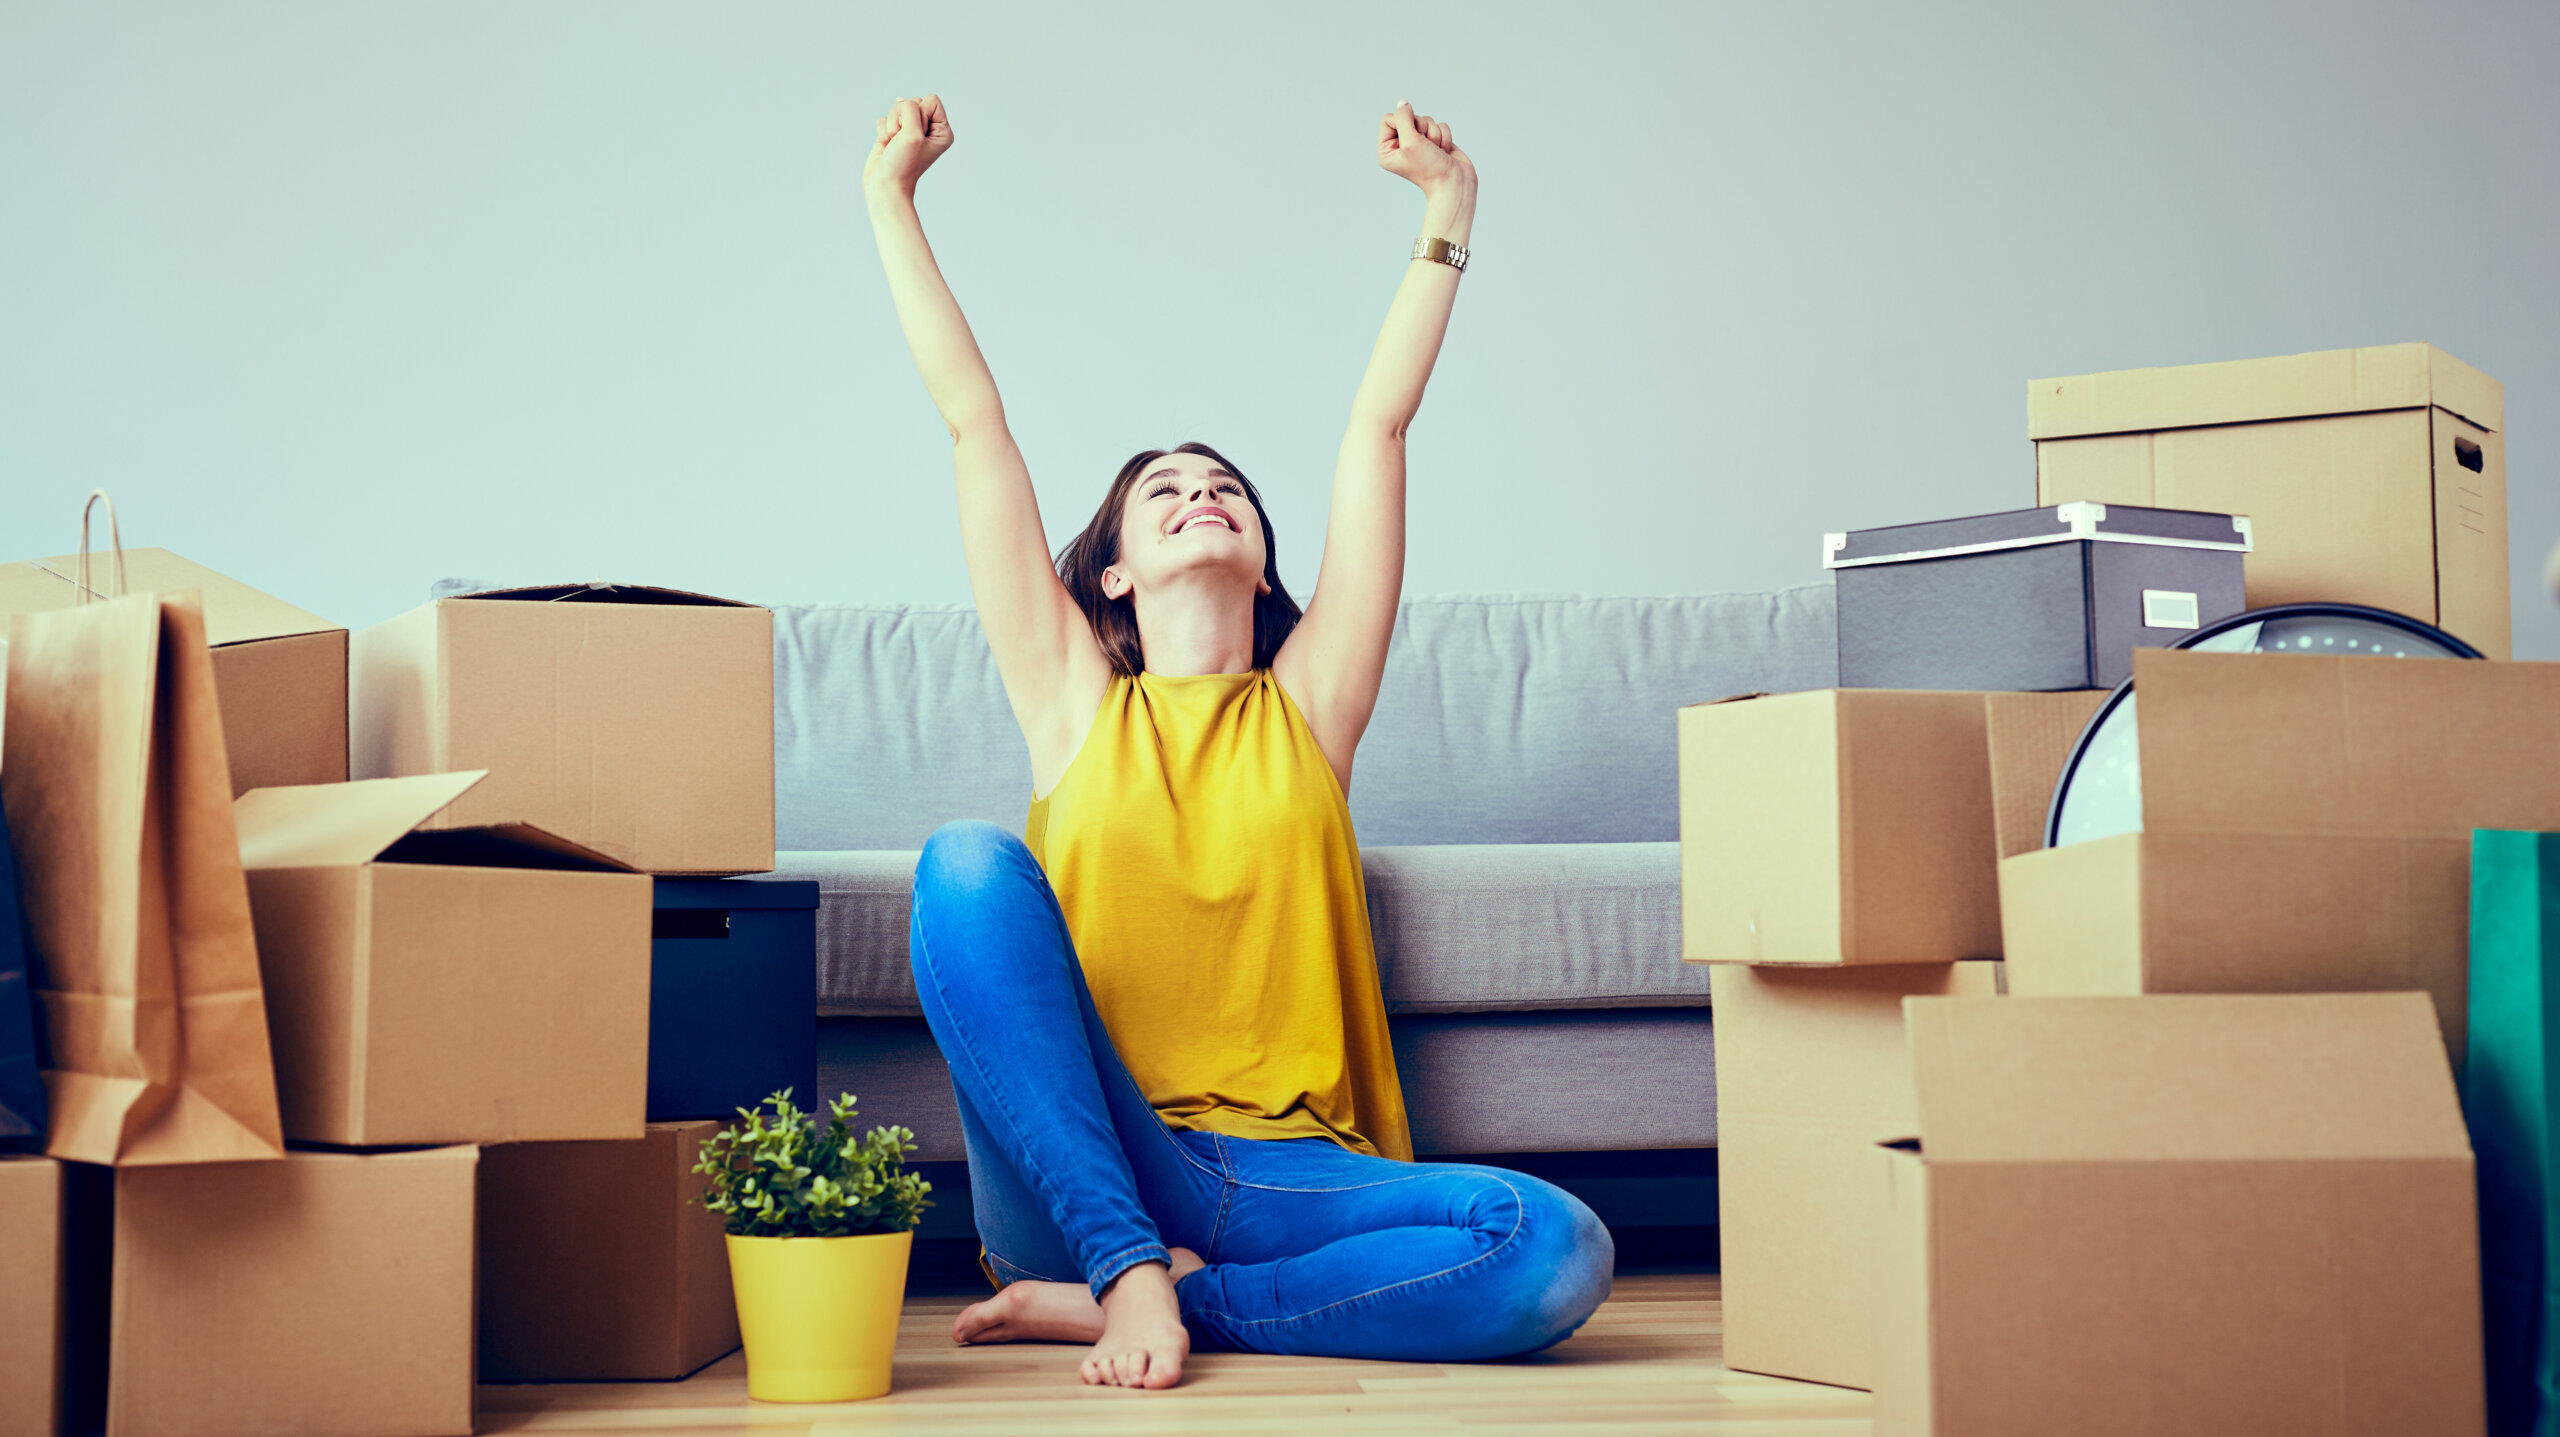 Happy woman celebrates moving amid boxes